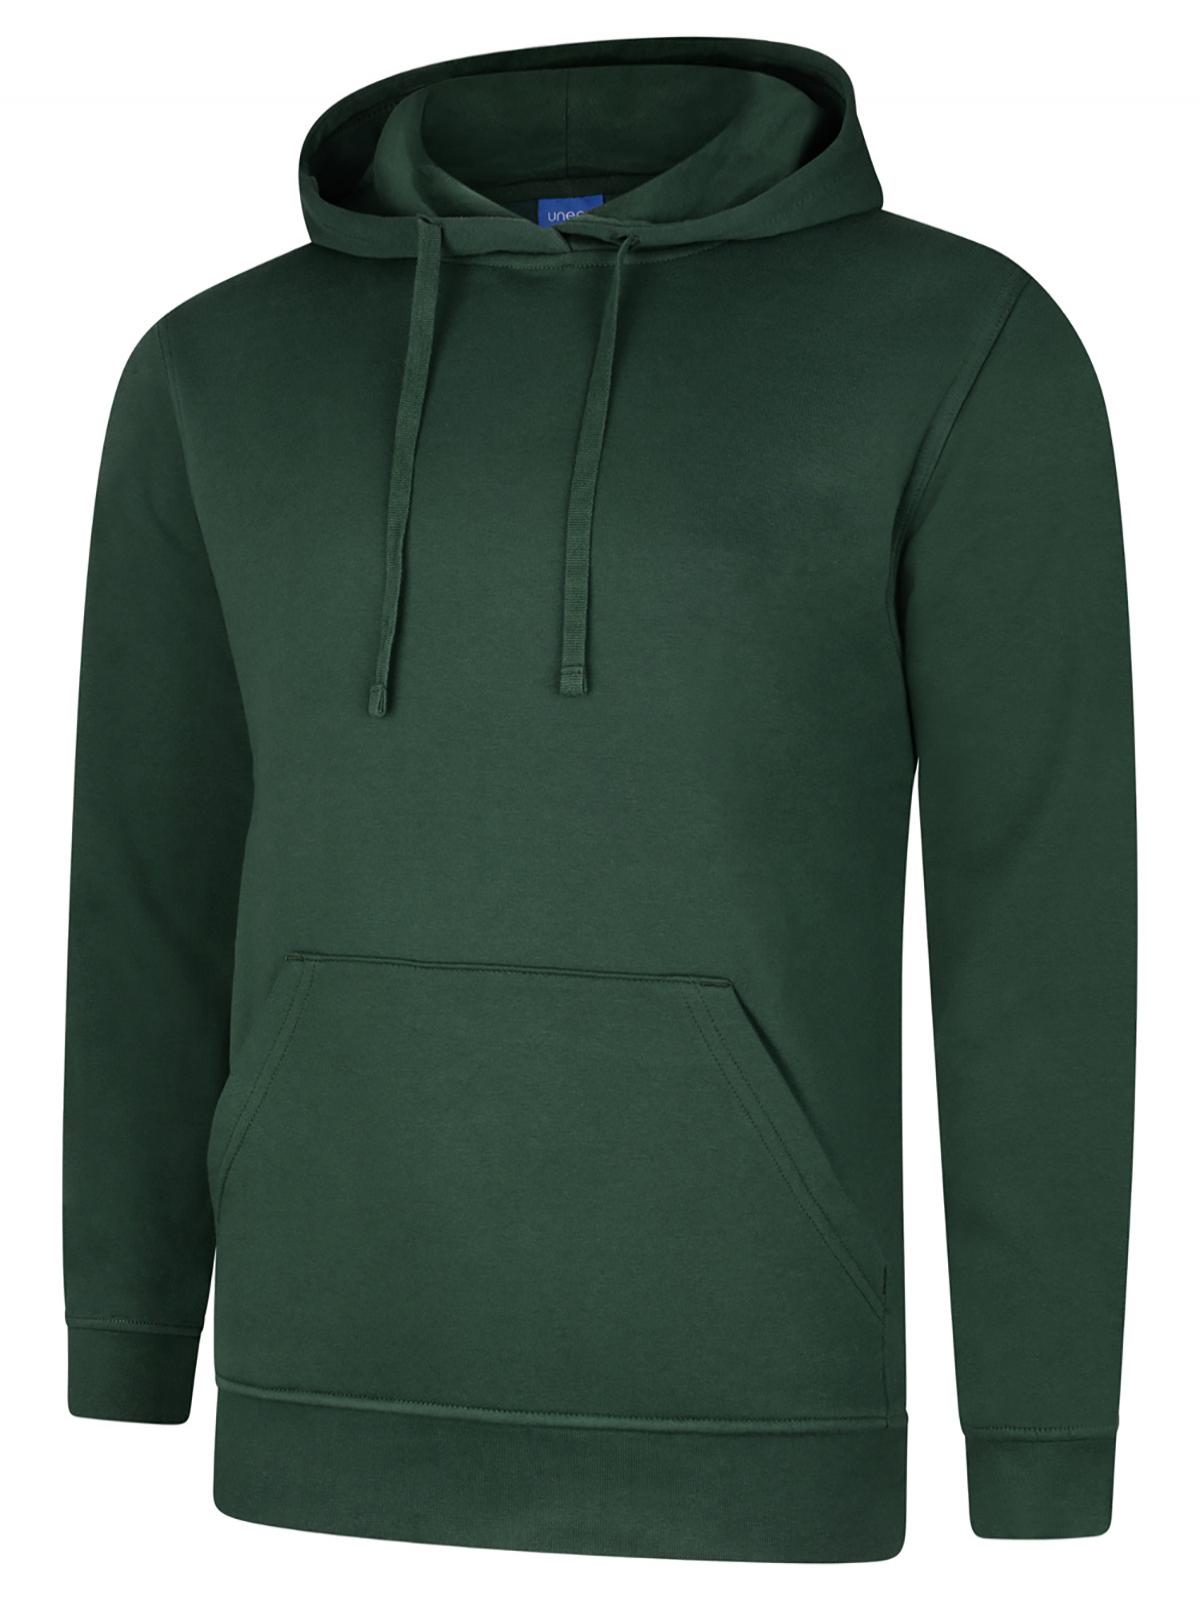 Uneek Deluxe Hooded Sweatshirt UC509 - Bottle Green